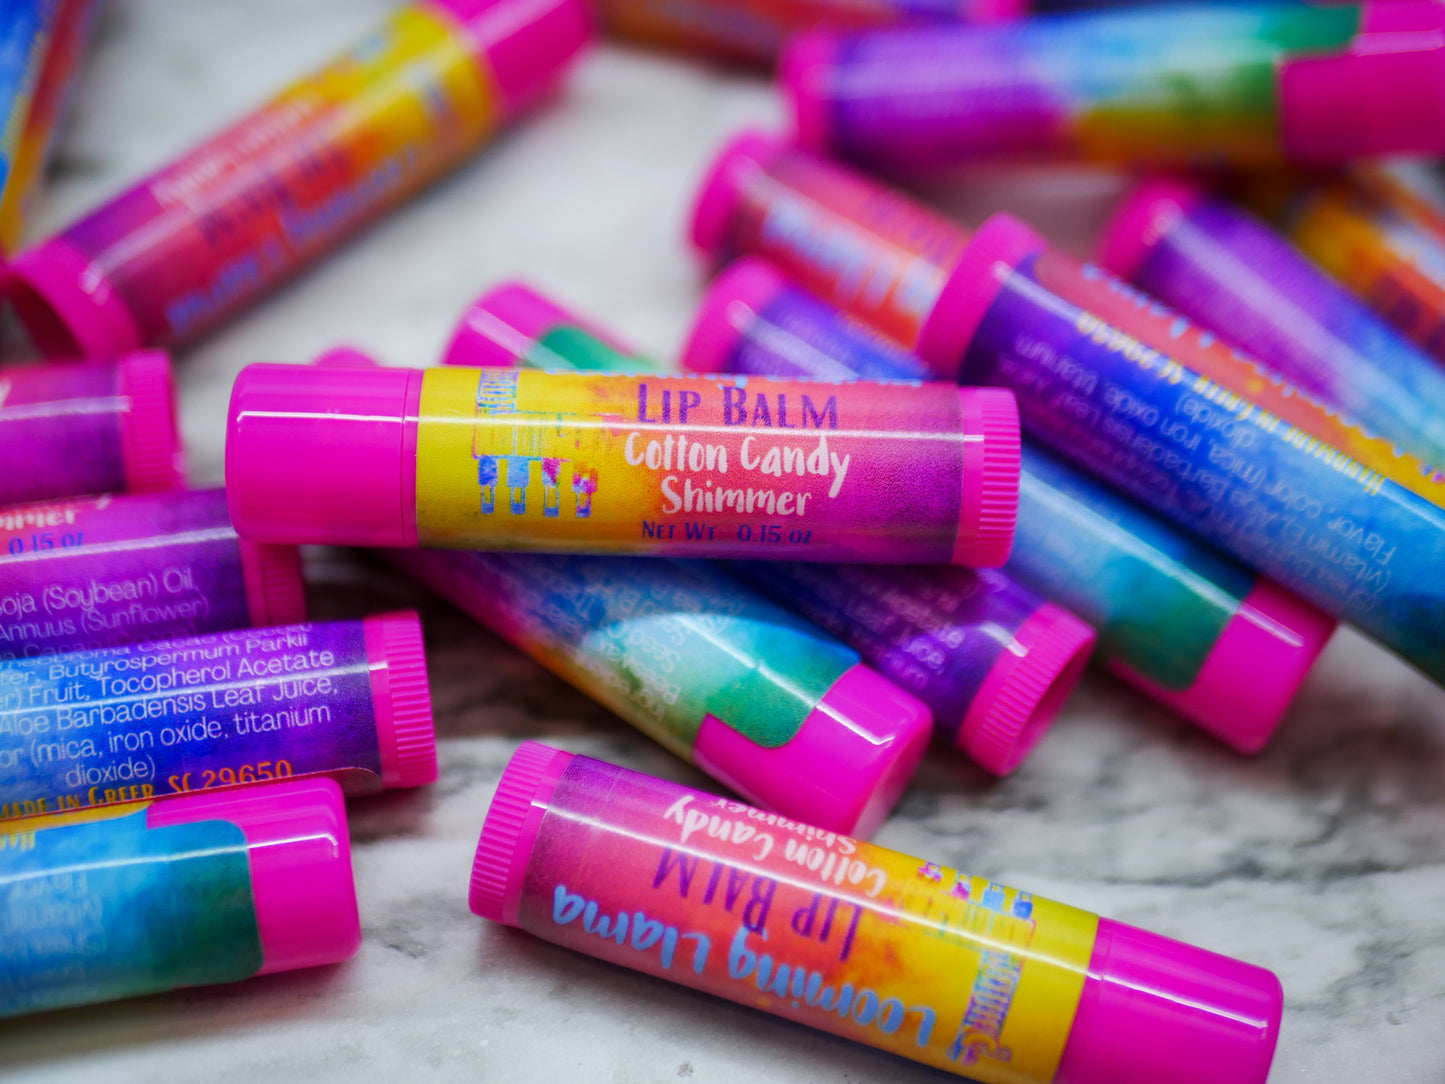 Lip Balm - Cotton Candy Shimmer